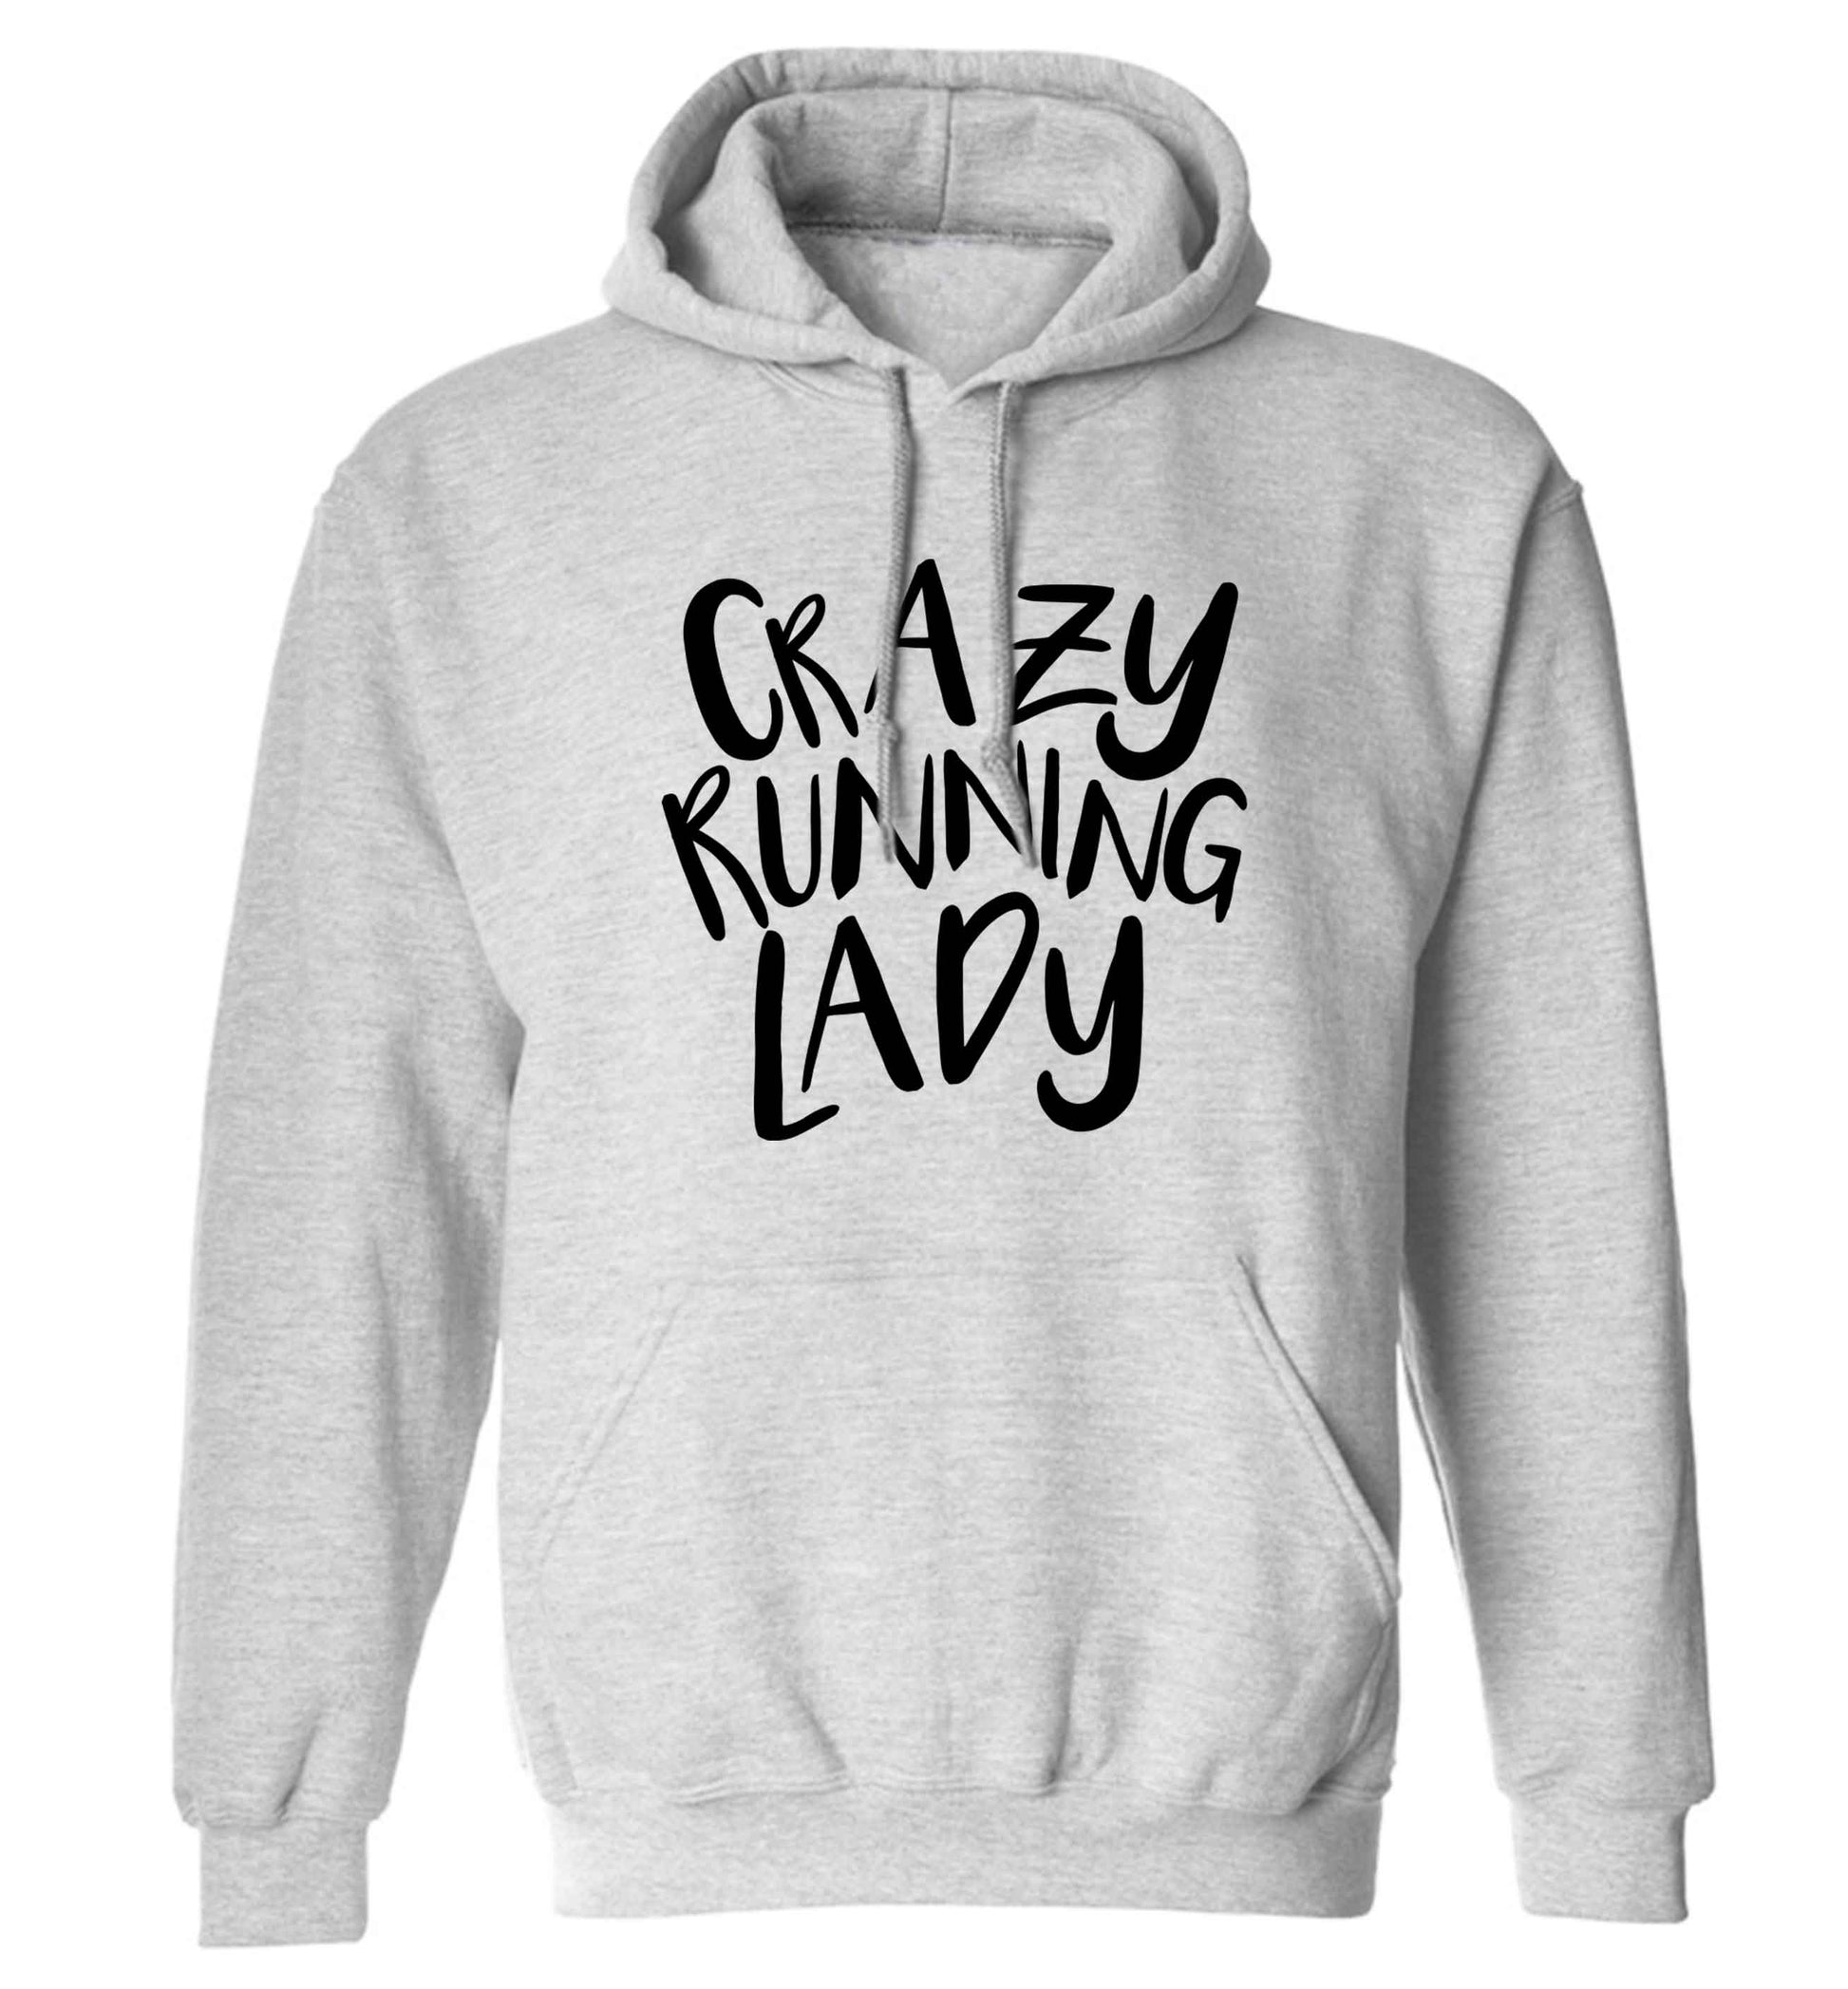 Crazy running lady adults unisex grey hoodie 2XL